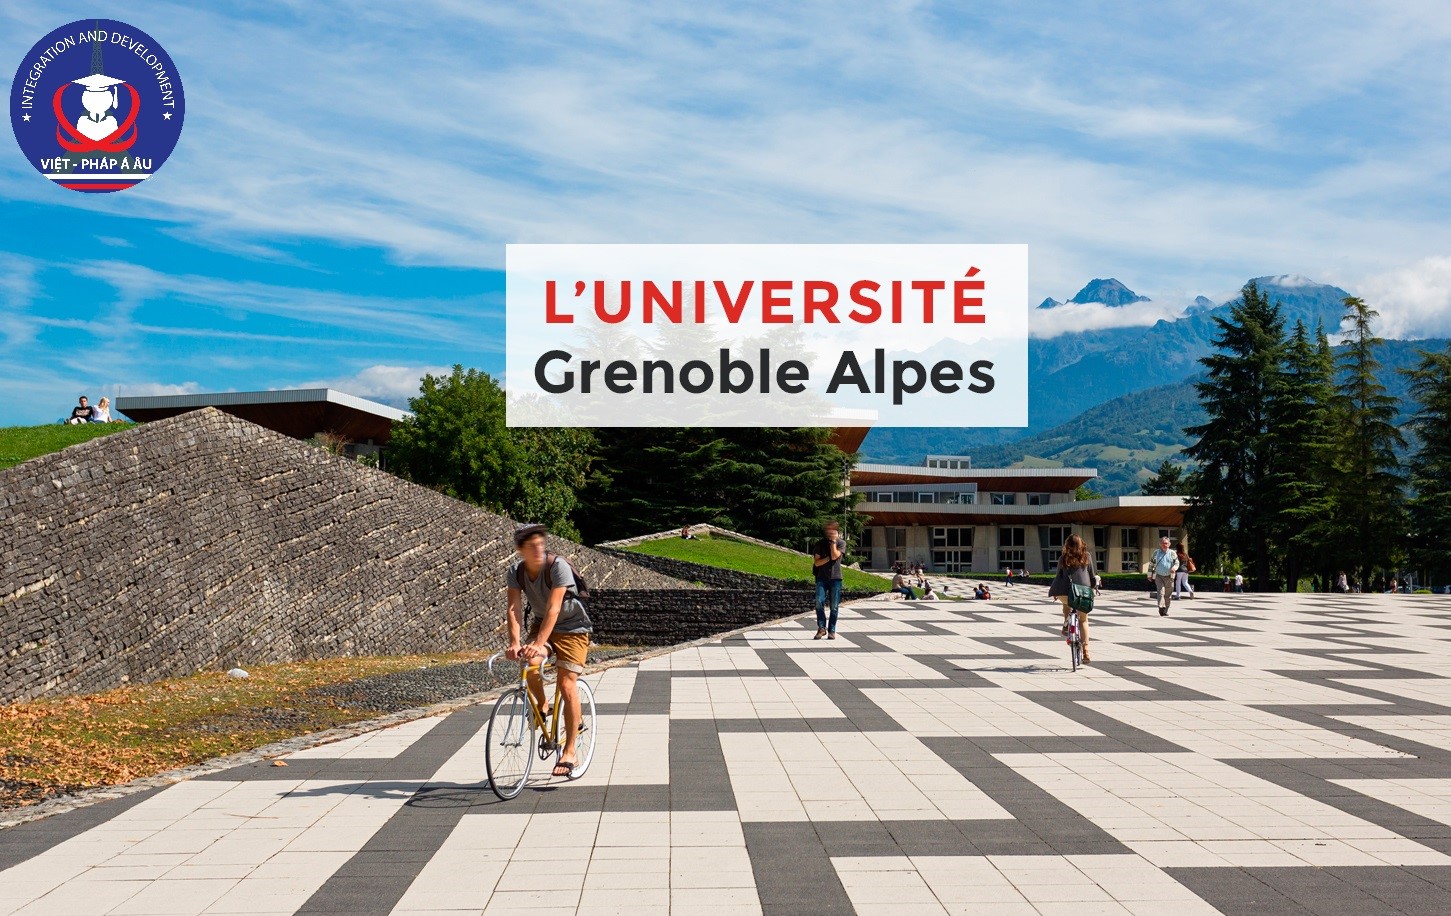 Trường Grenoble Alpes